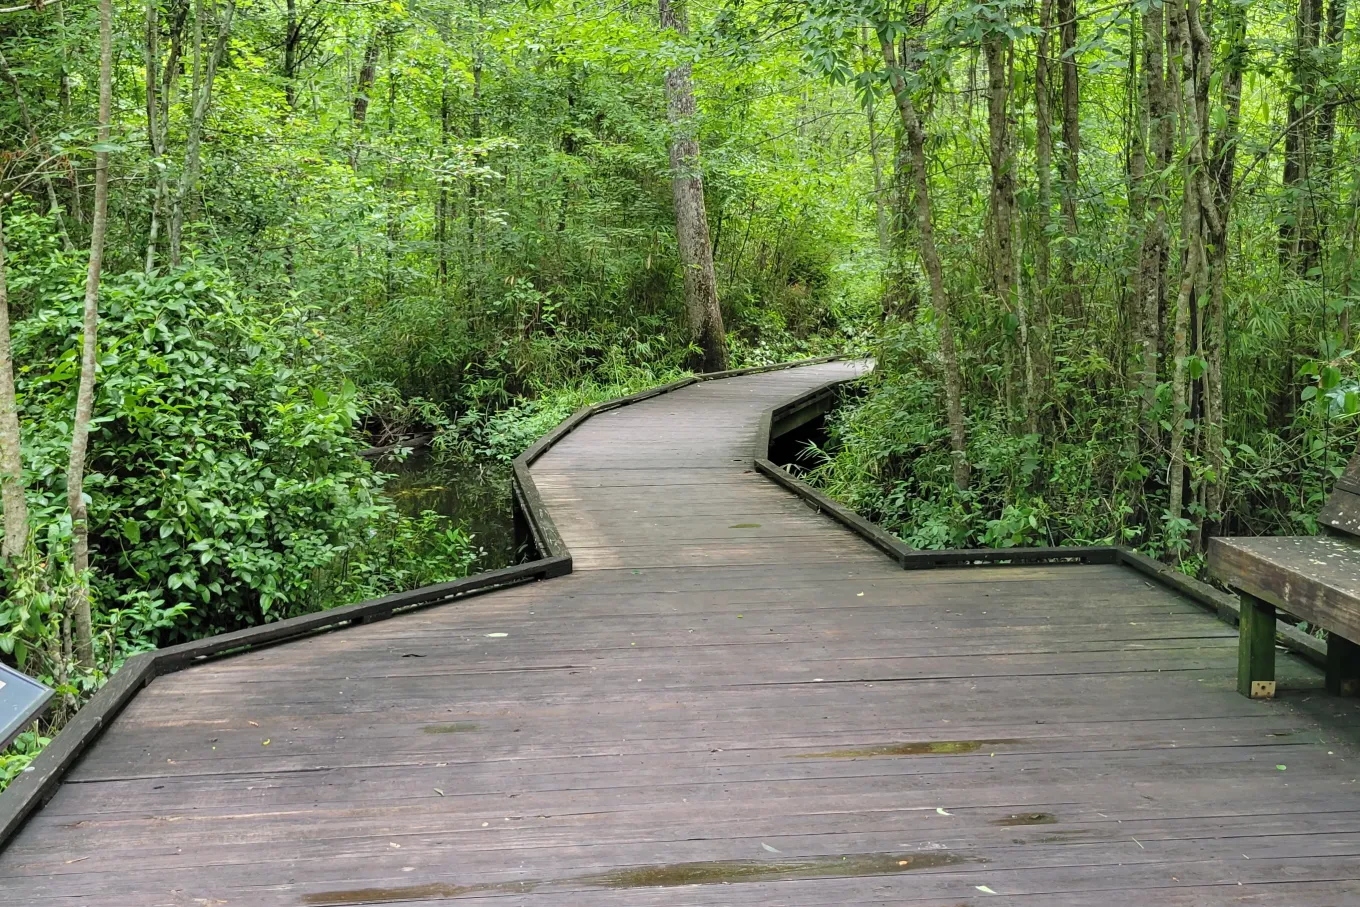 wooden walkway through bright green forest